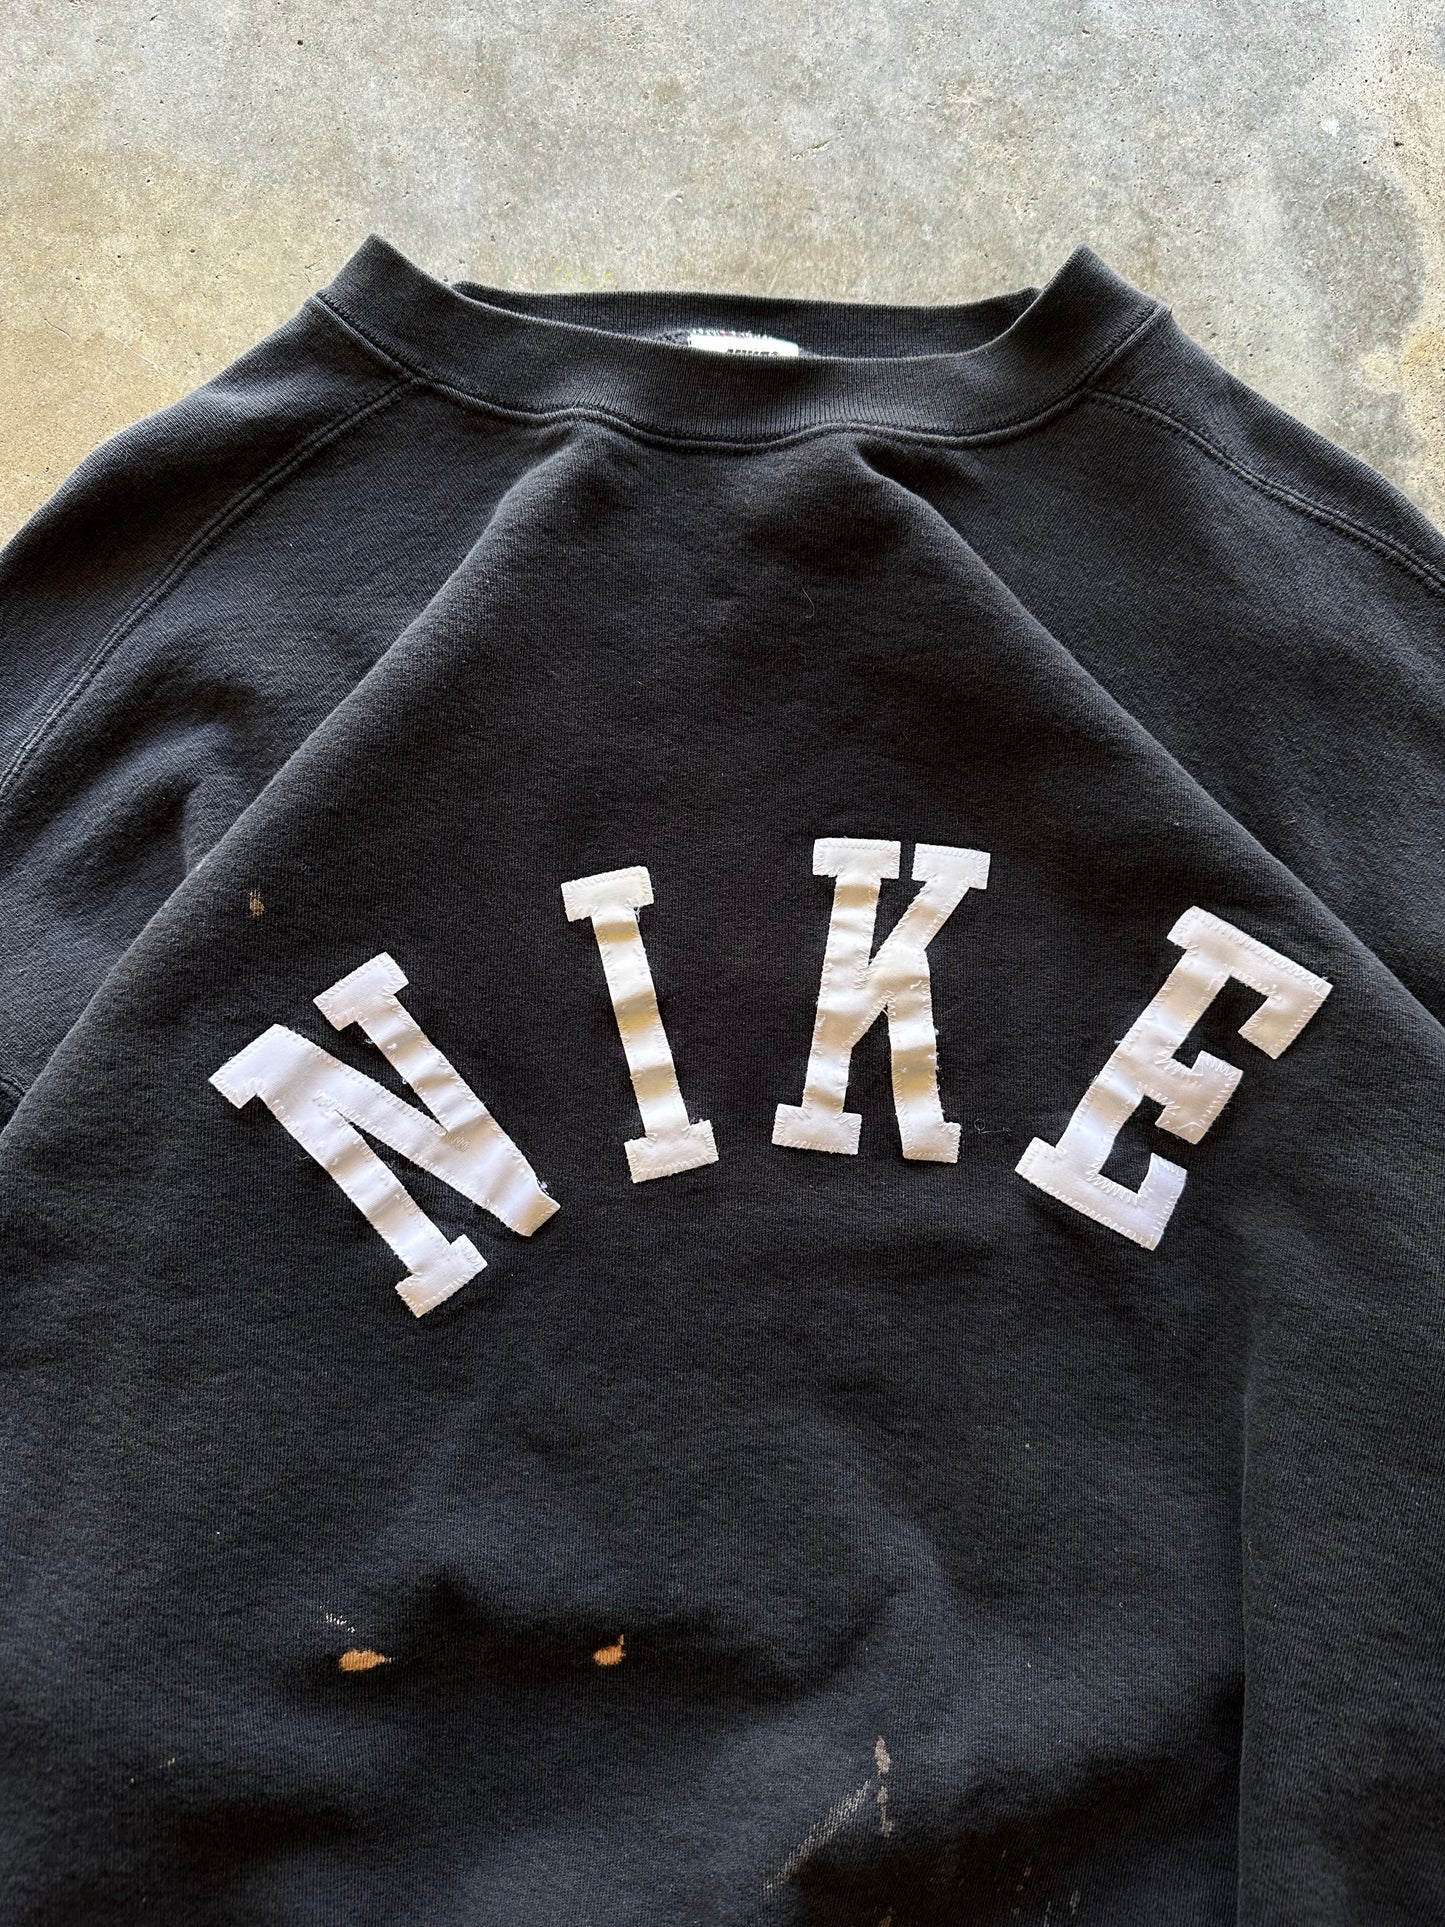 (XXL) Vintage Nike Sweatshirt